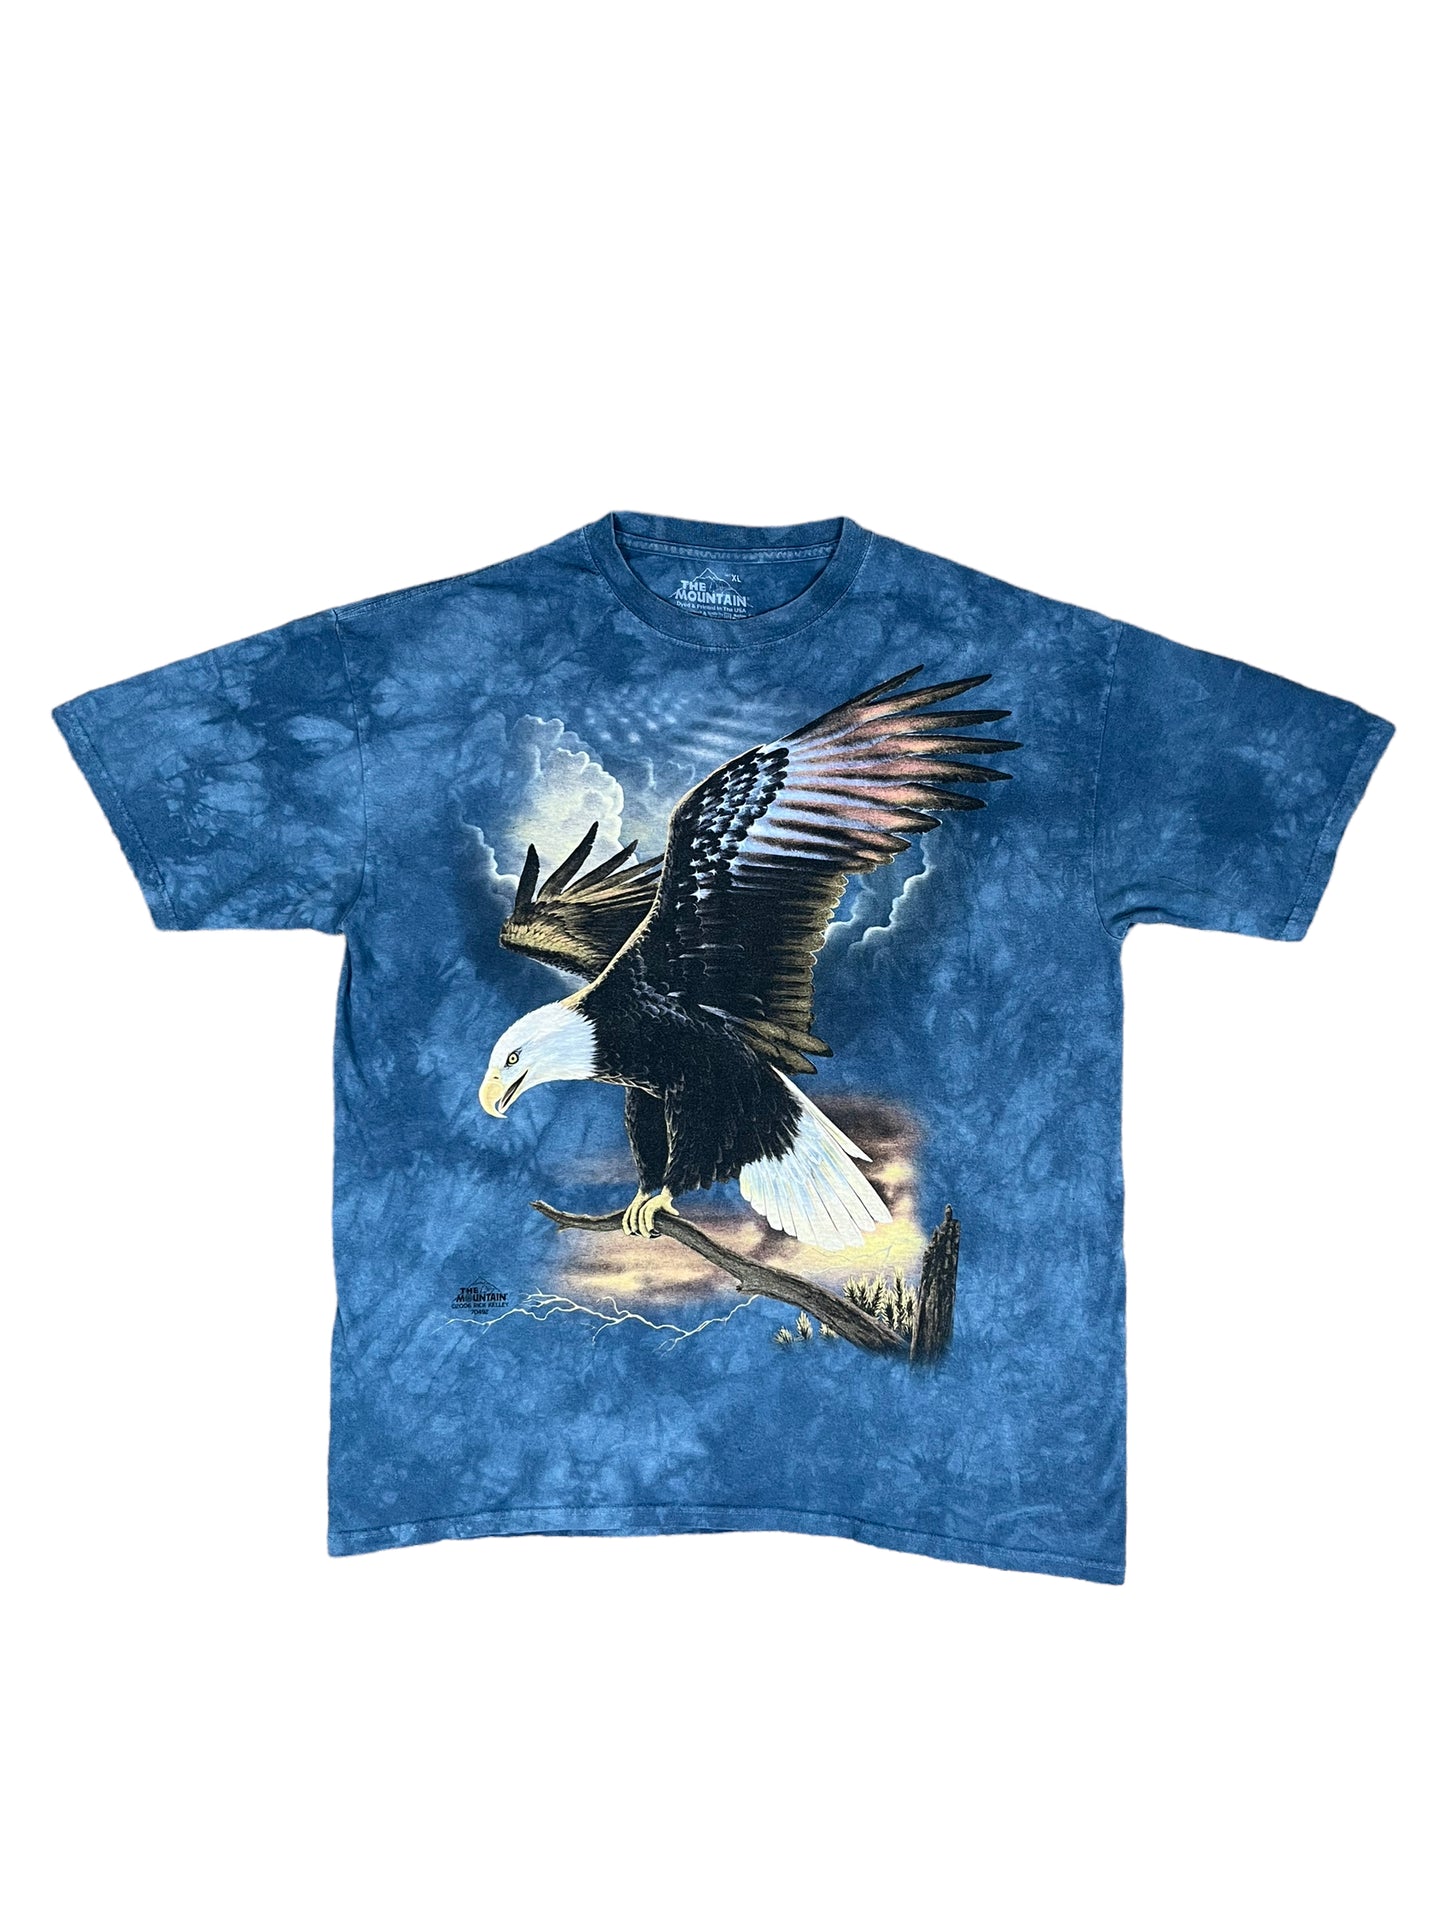 Vintage The Mountain Eagle T Shirt - XL